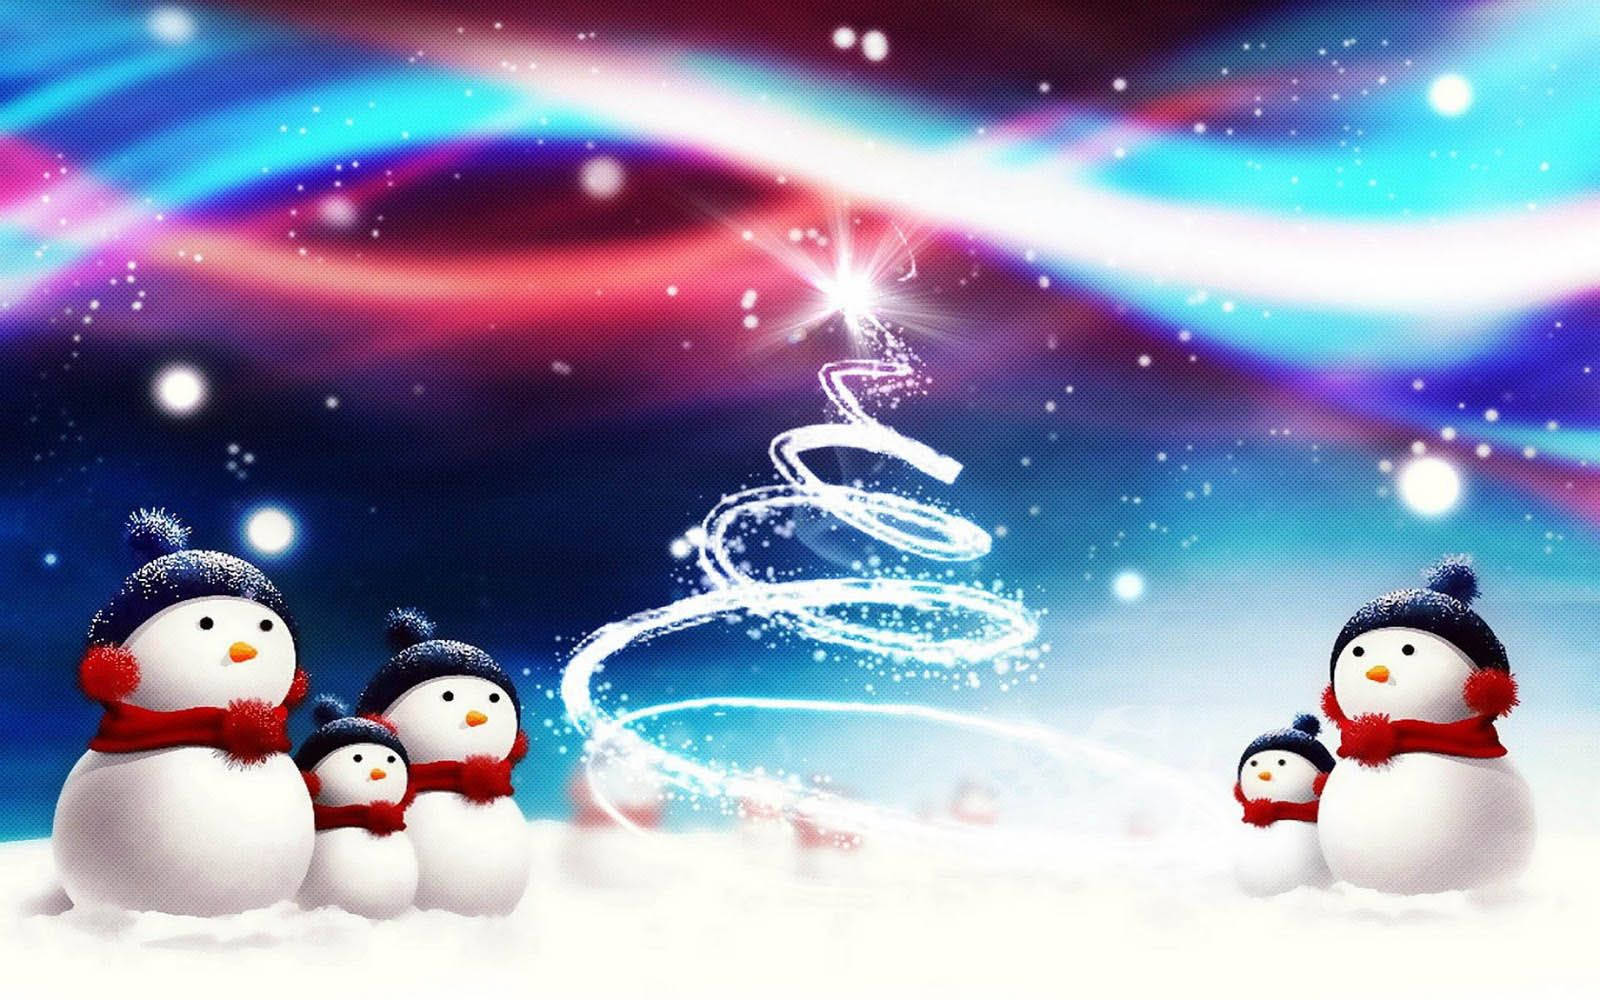 Snowman Aurora Christmas Wallpaper